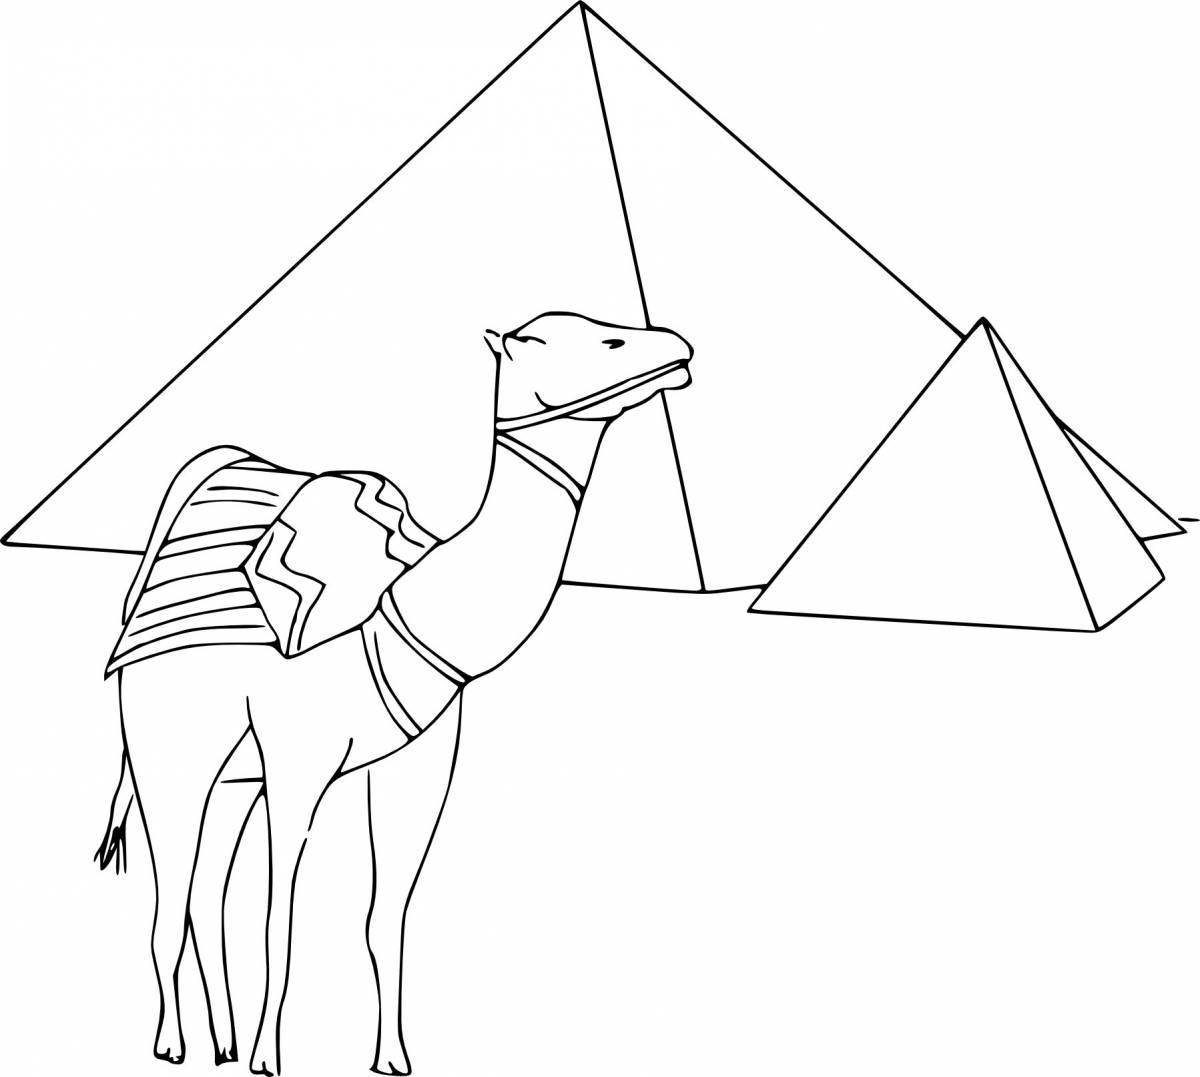 Splendorous coloring page chestnut egyptian pyramid